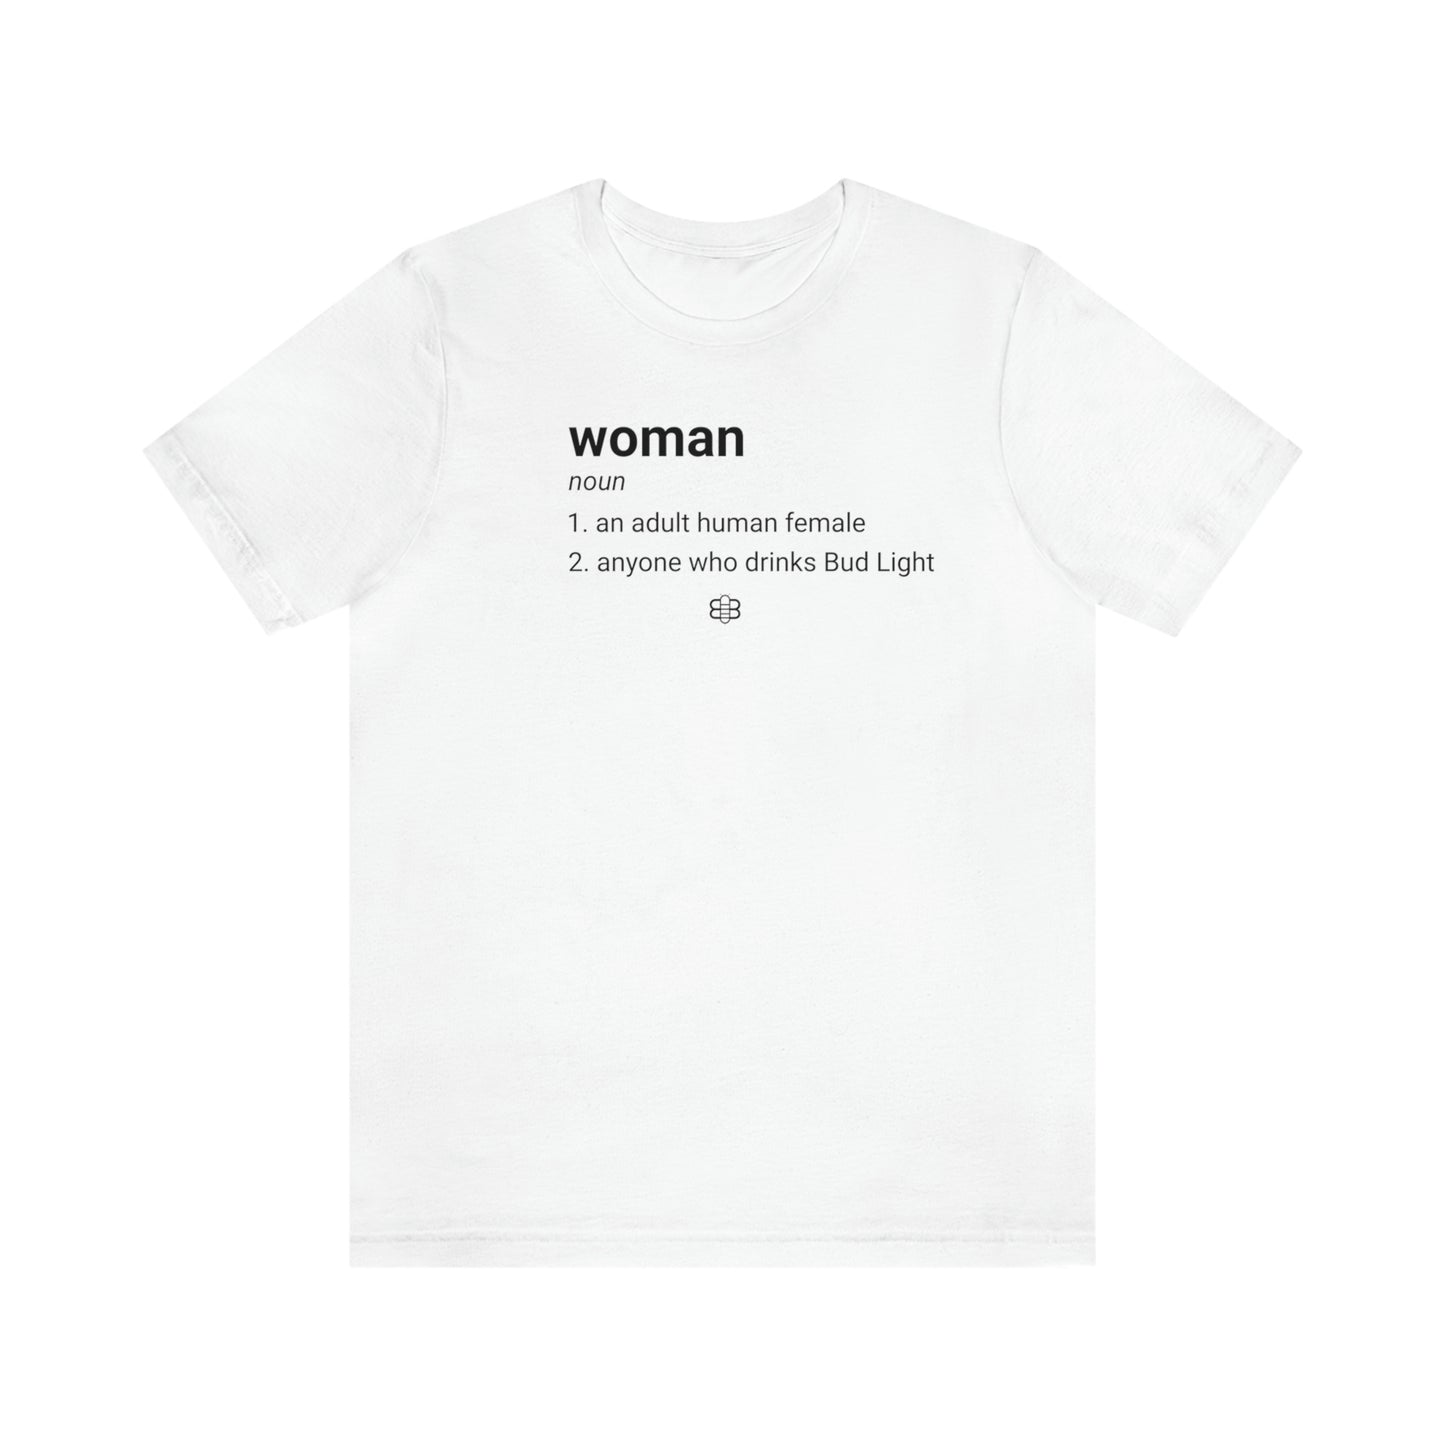 Woman Definition Shirt